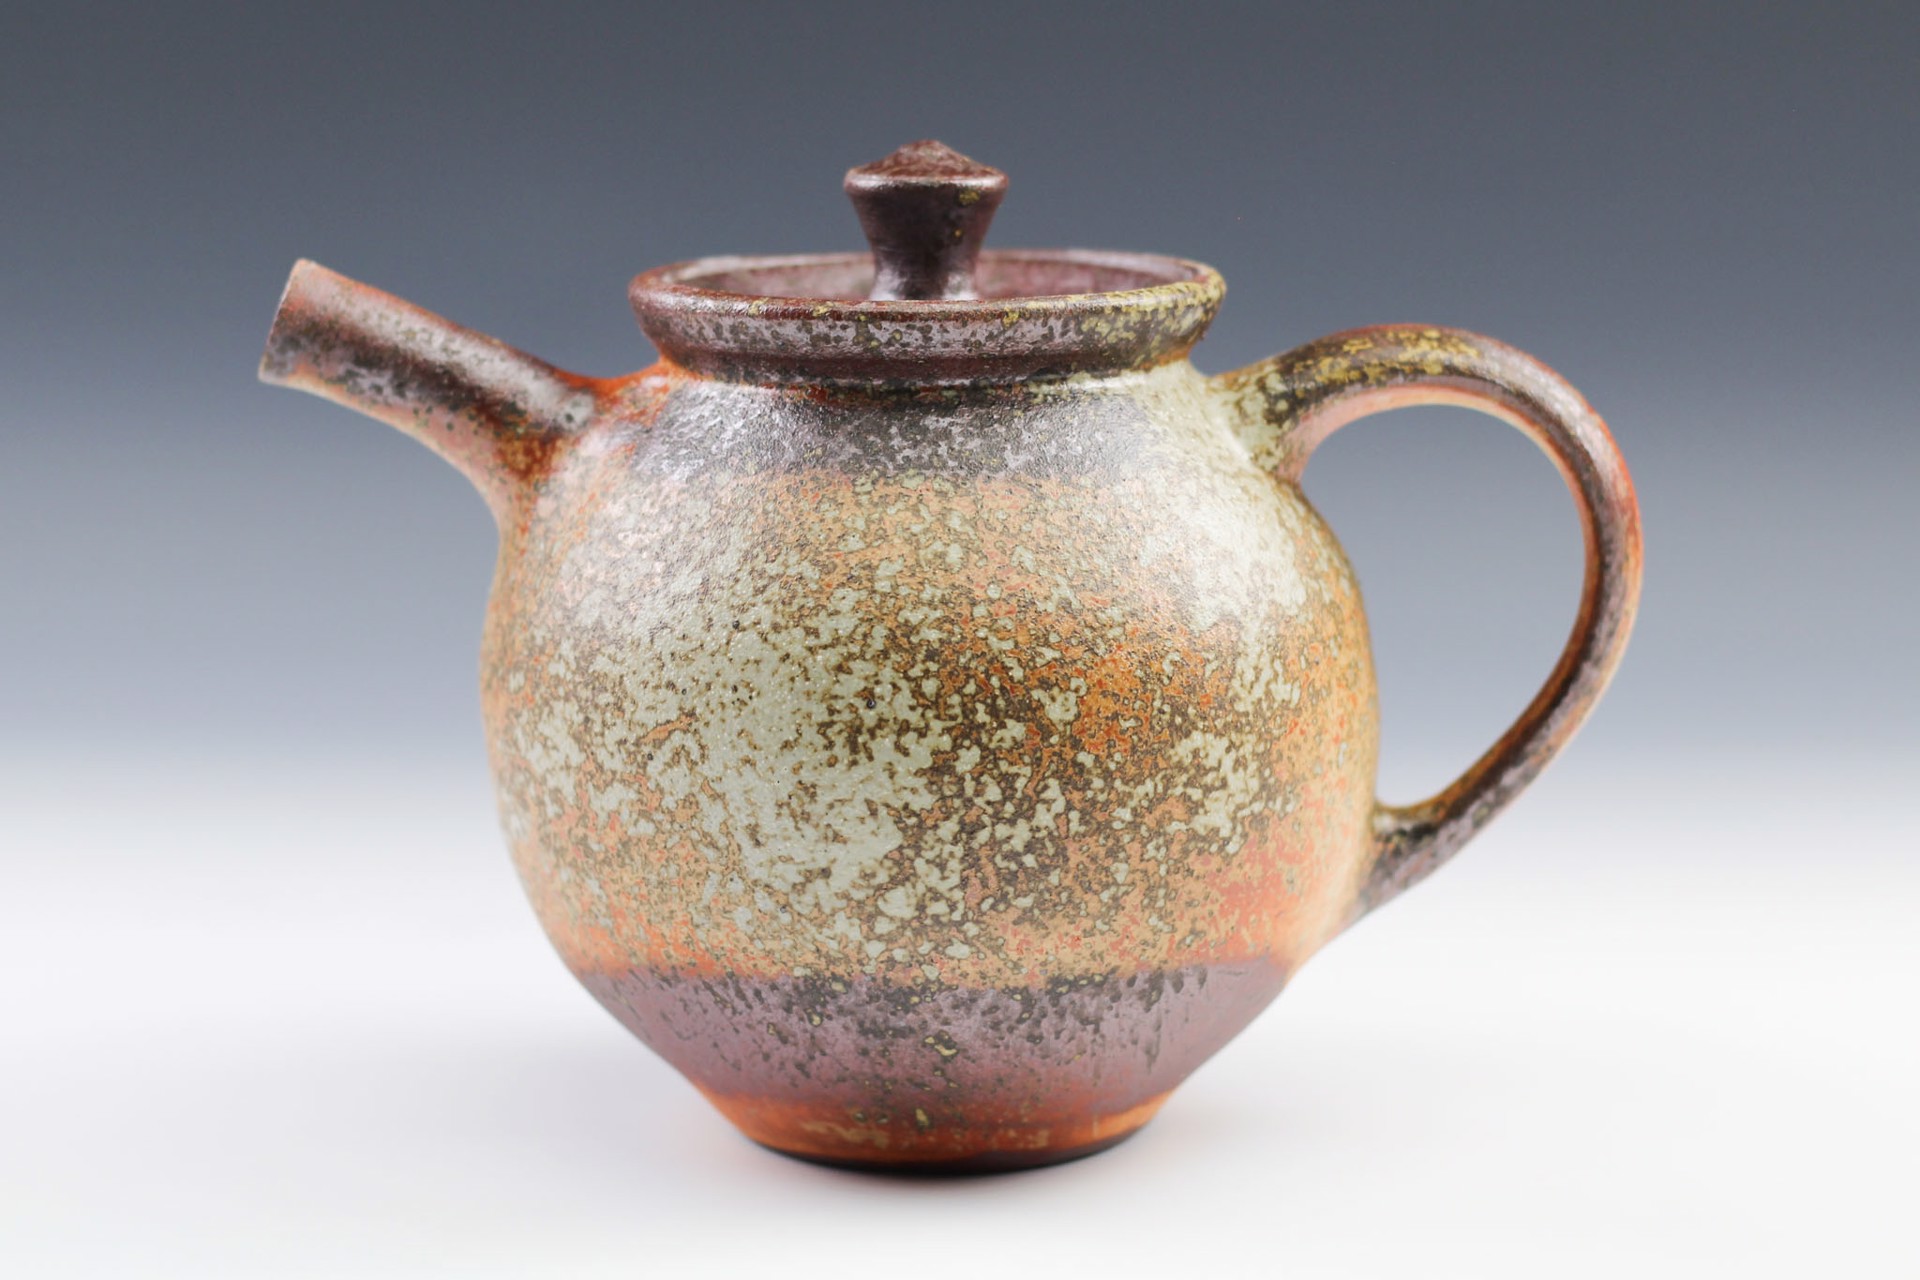 Teapot by George Lowe